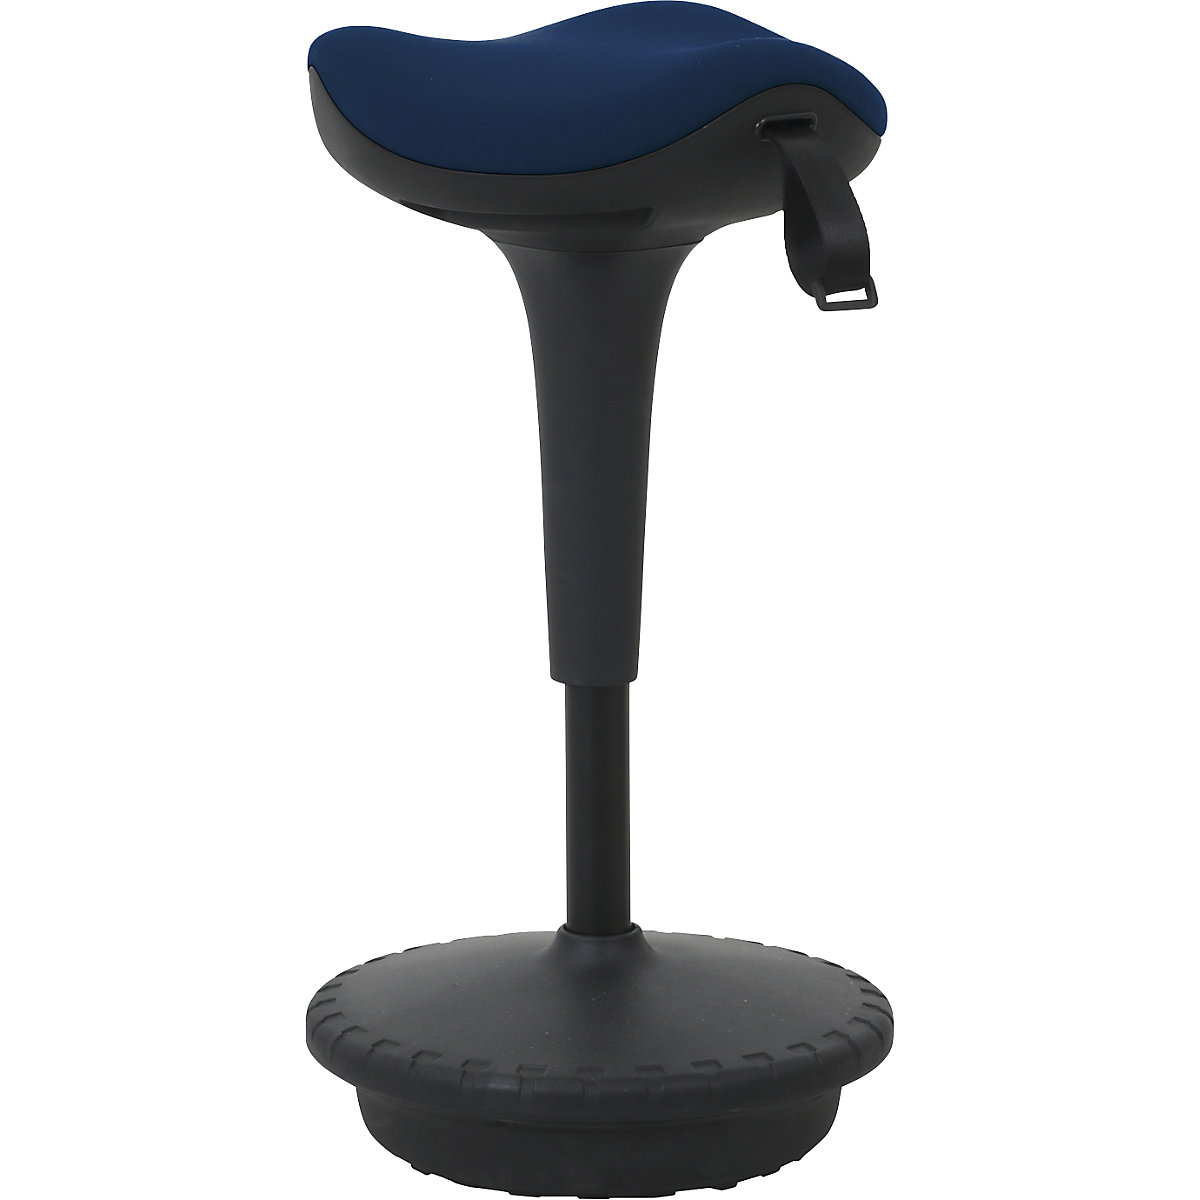 Anti-fatigue stool 6156 – Twinco, triangular seat 325 mm, blue cover